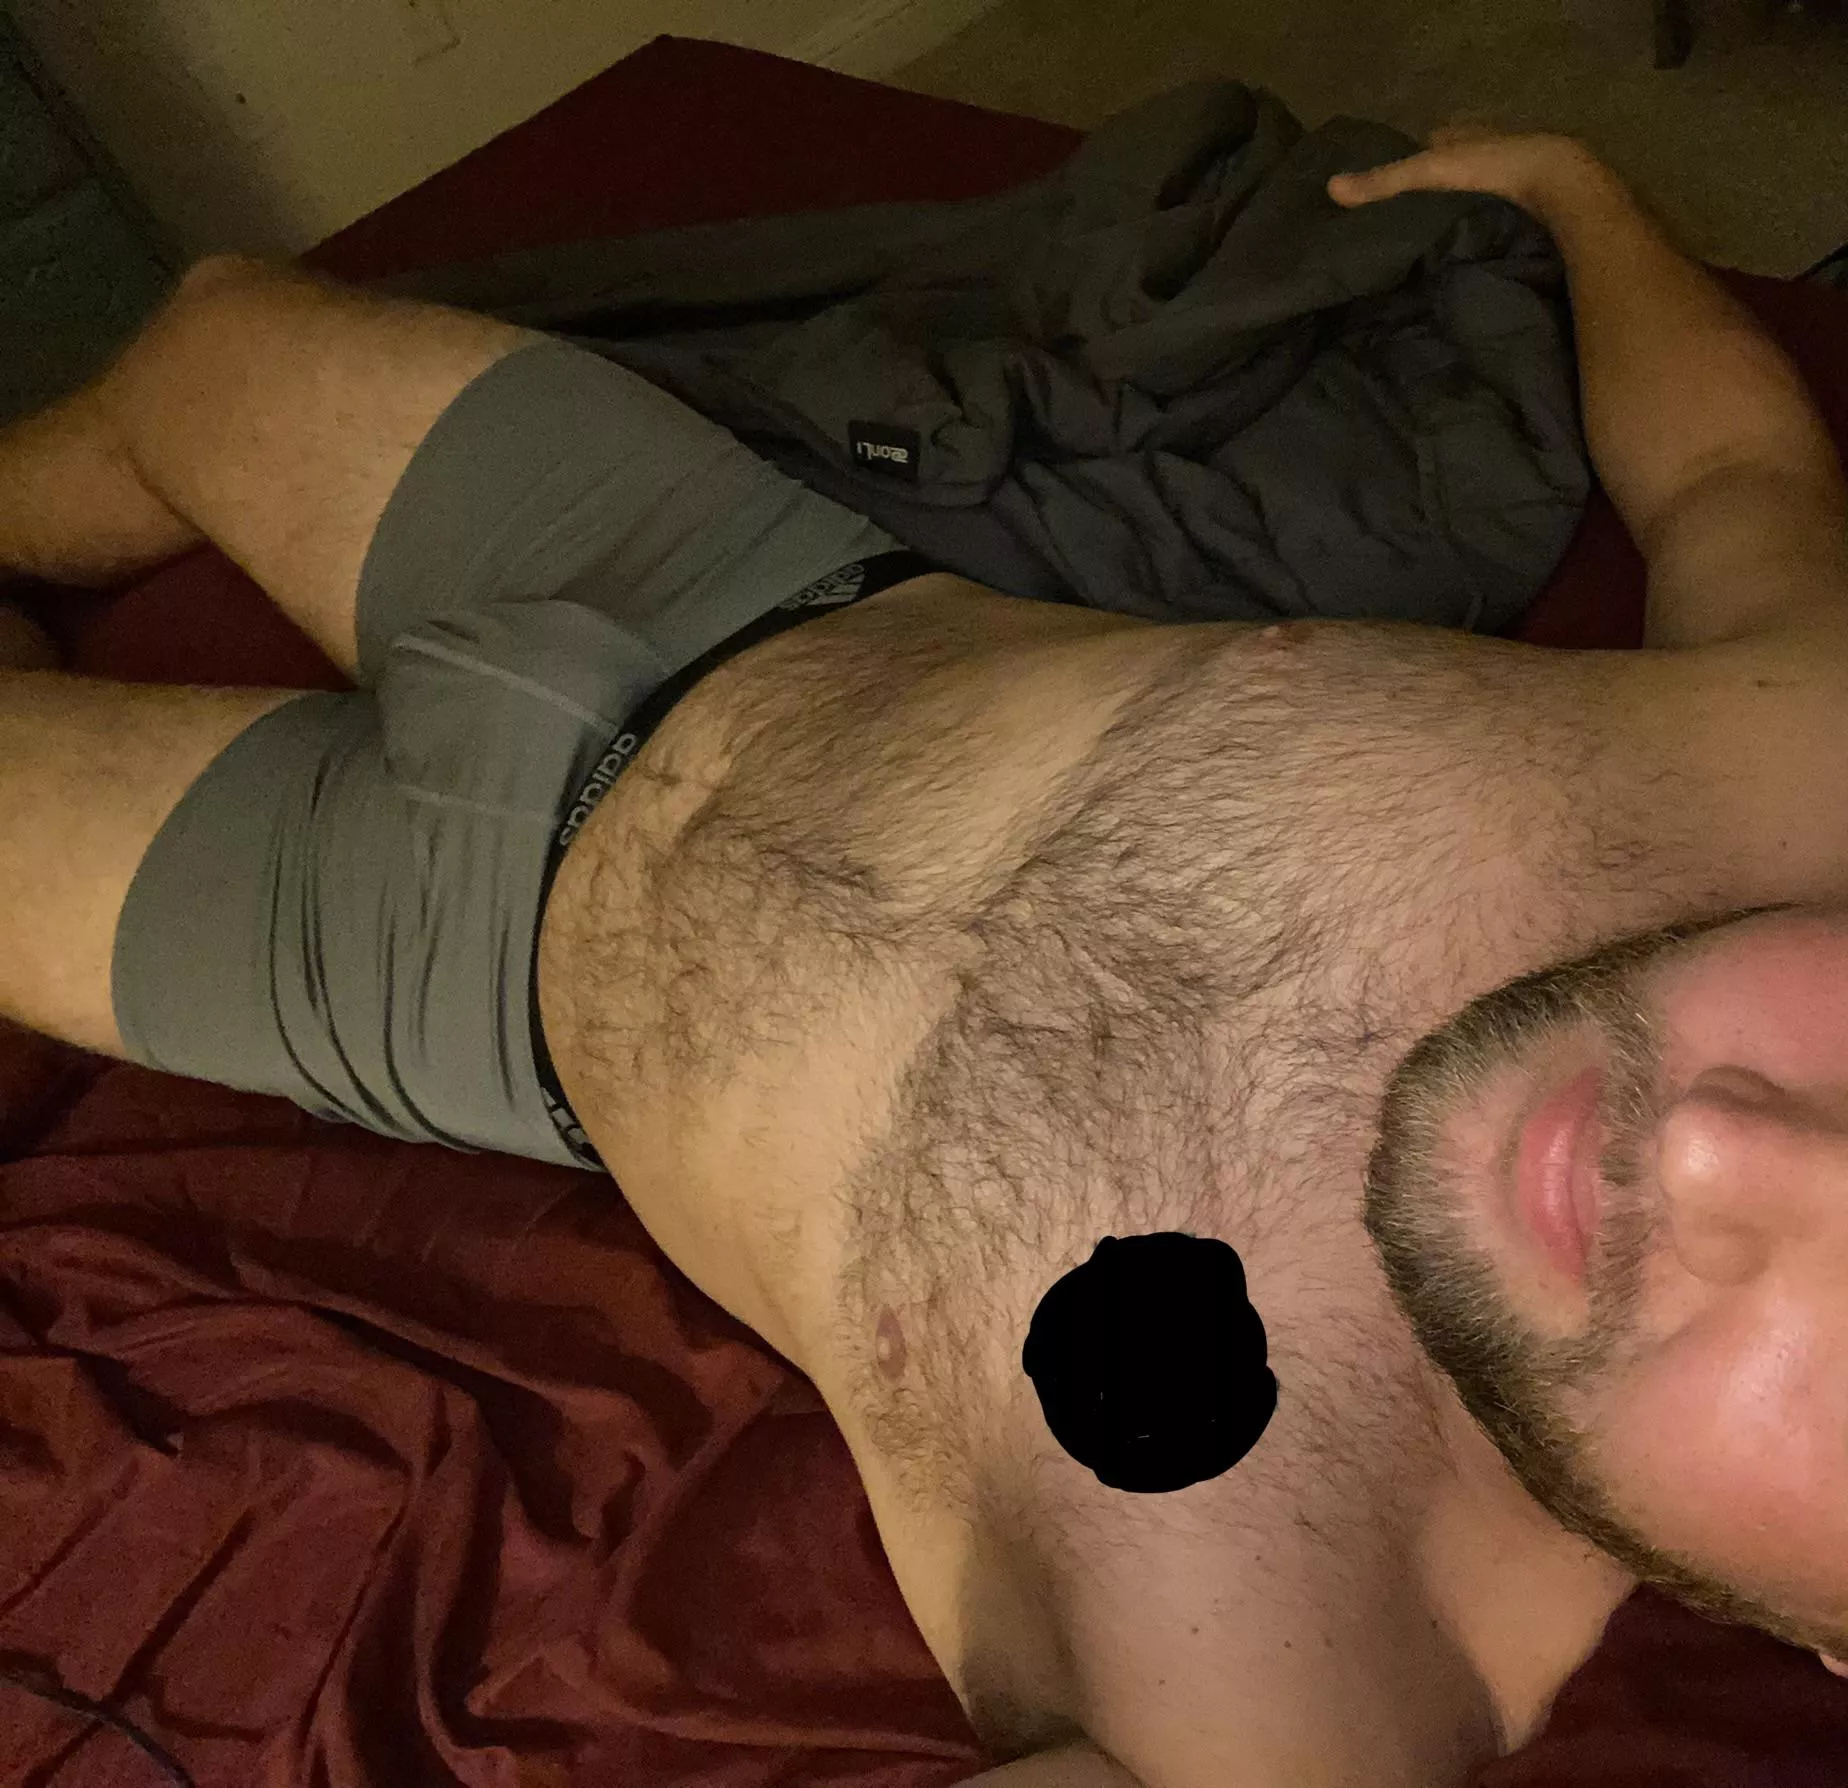 Late Night Bulge Selfie Nudes Bulges NUDE PICS ORG